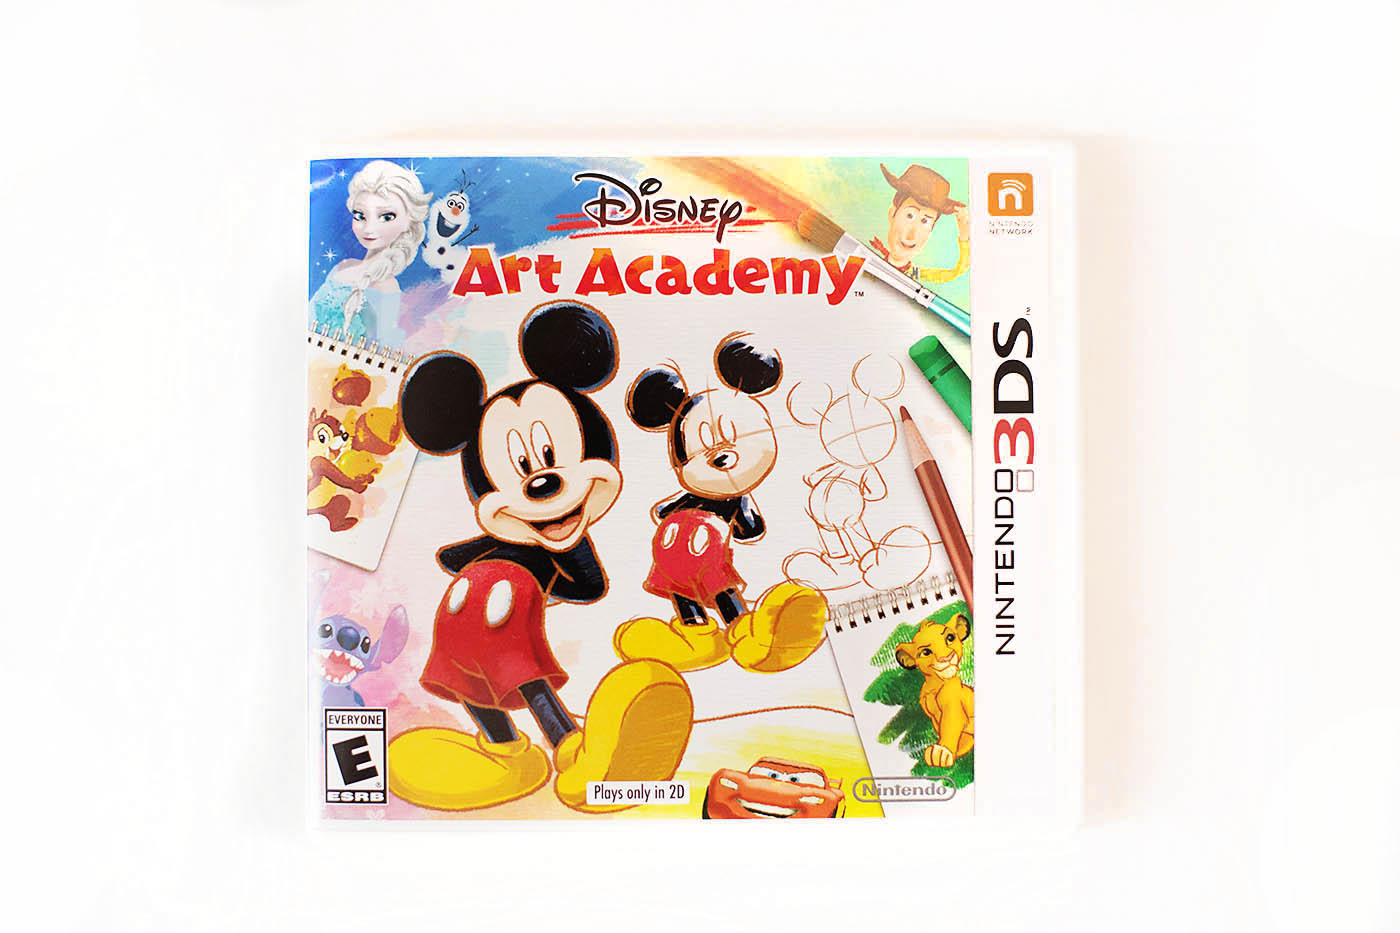 Disney Art Academy for 3DS